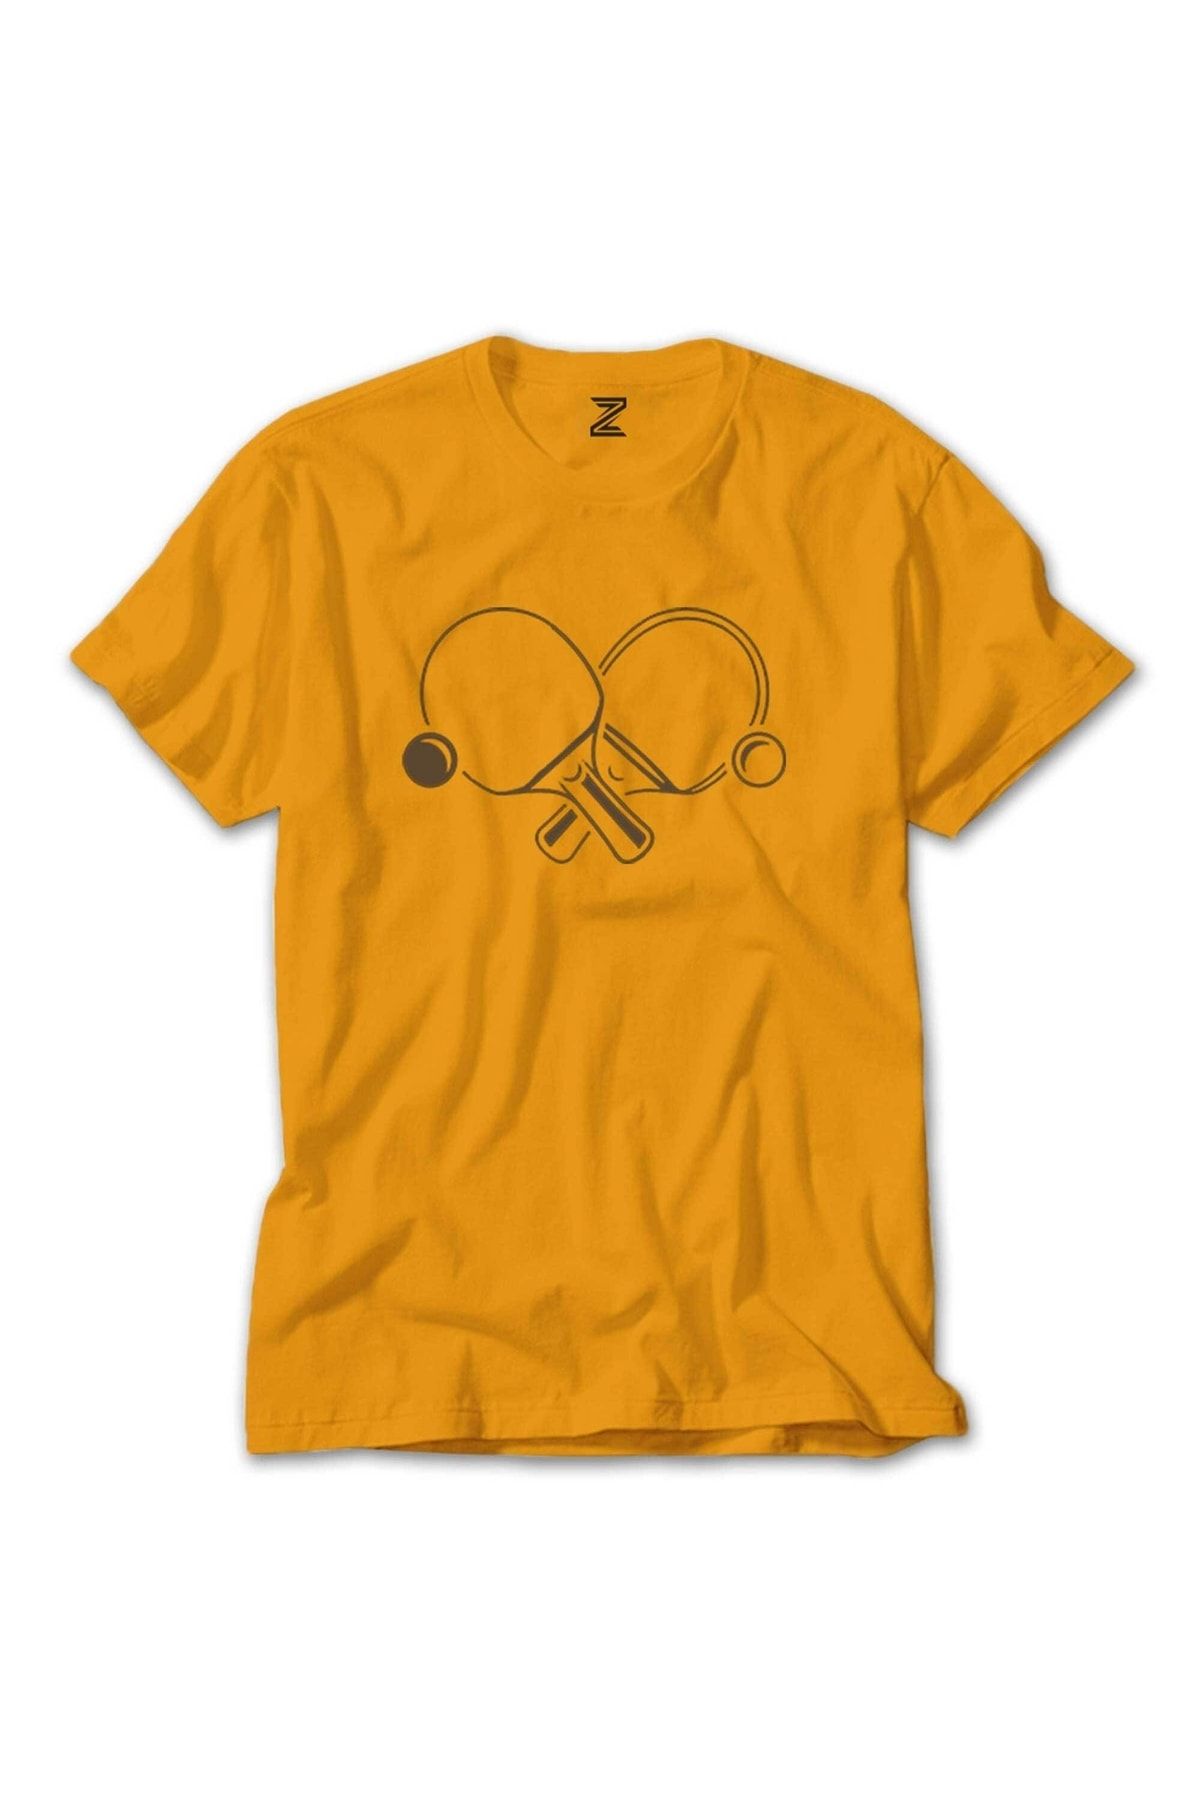 Z zepplin Ping Pong Rackets Soft Sarı Tişört